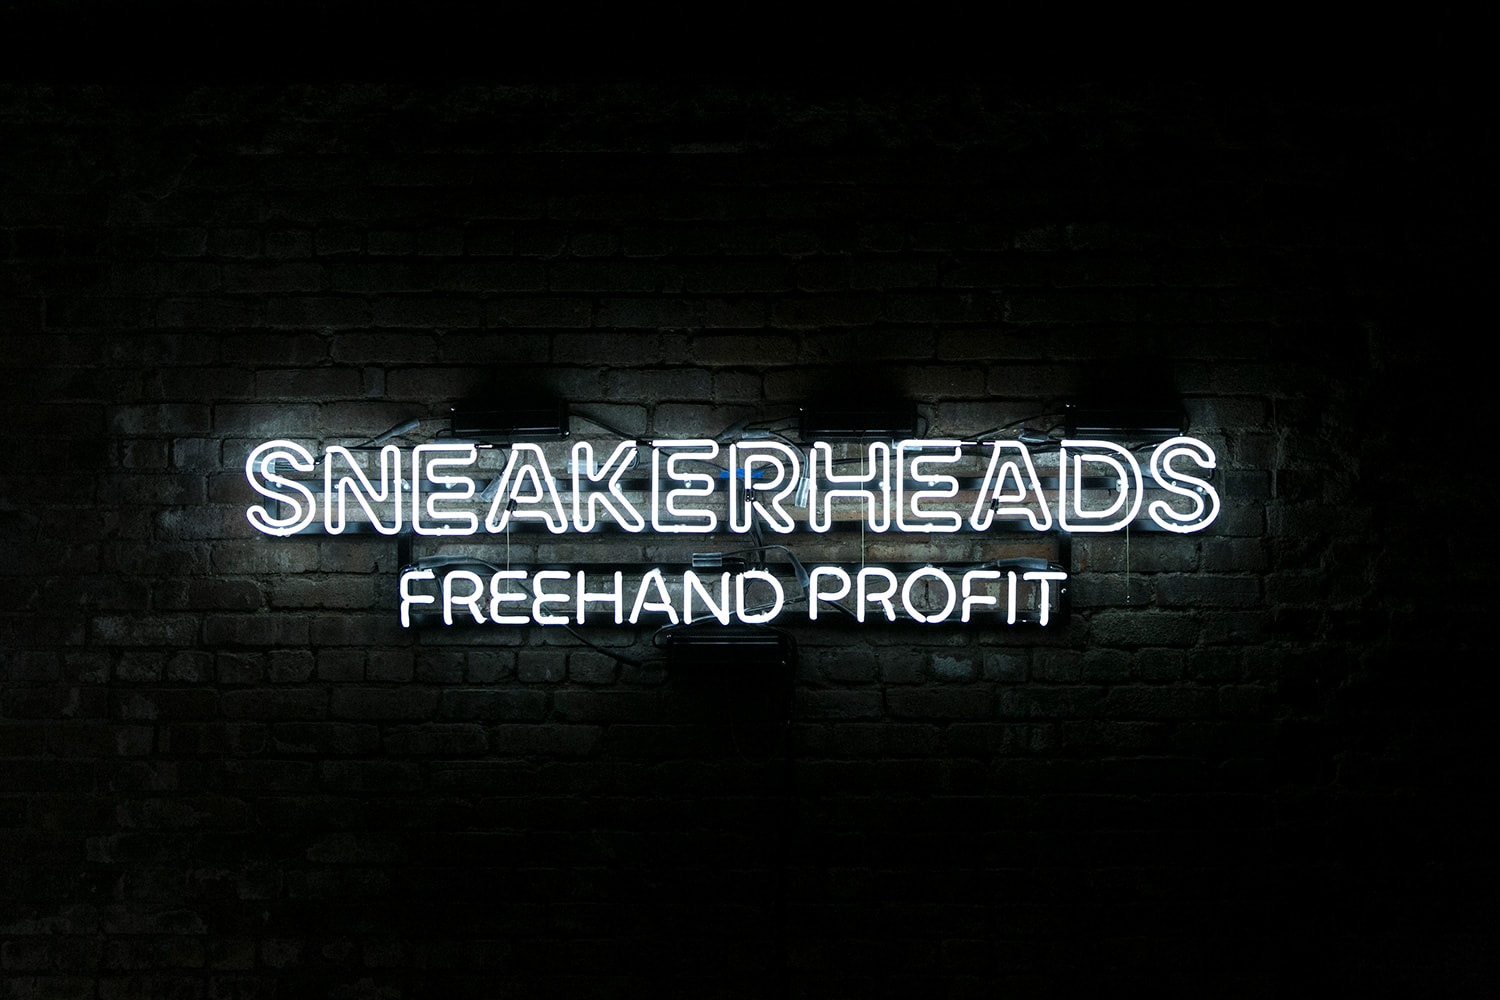 adidas Freehand Profit SNEAKERHEAD Exhibit Three Stripes adidas Originals SoHo New York City